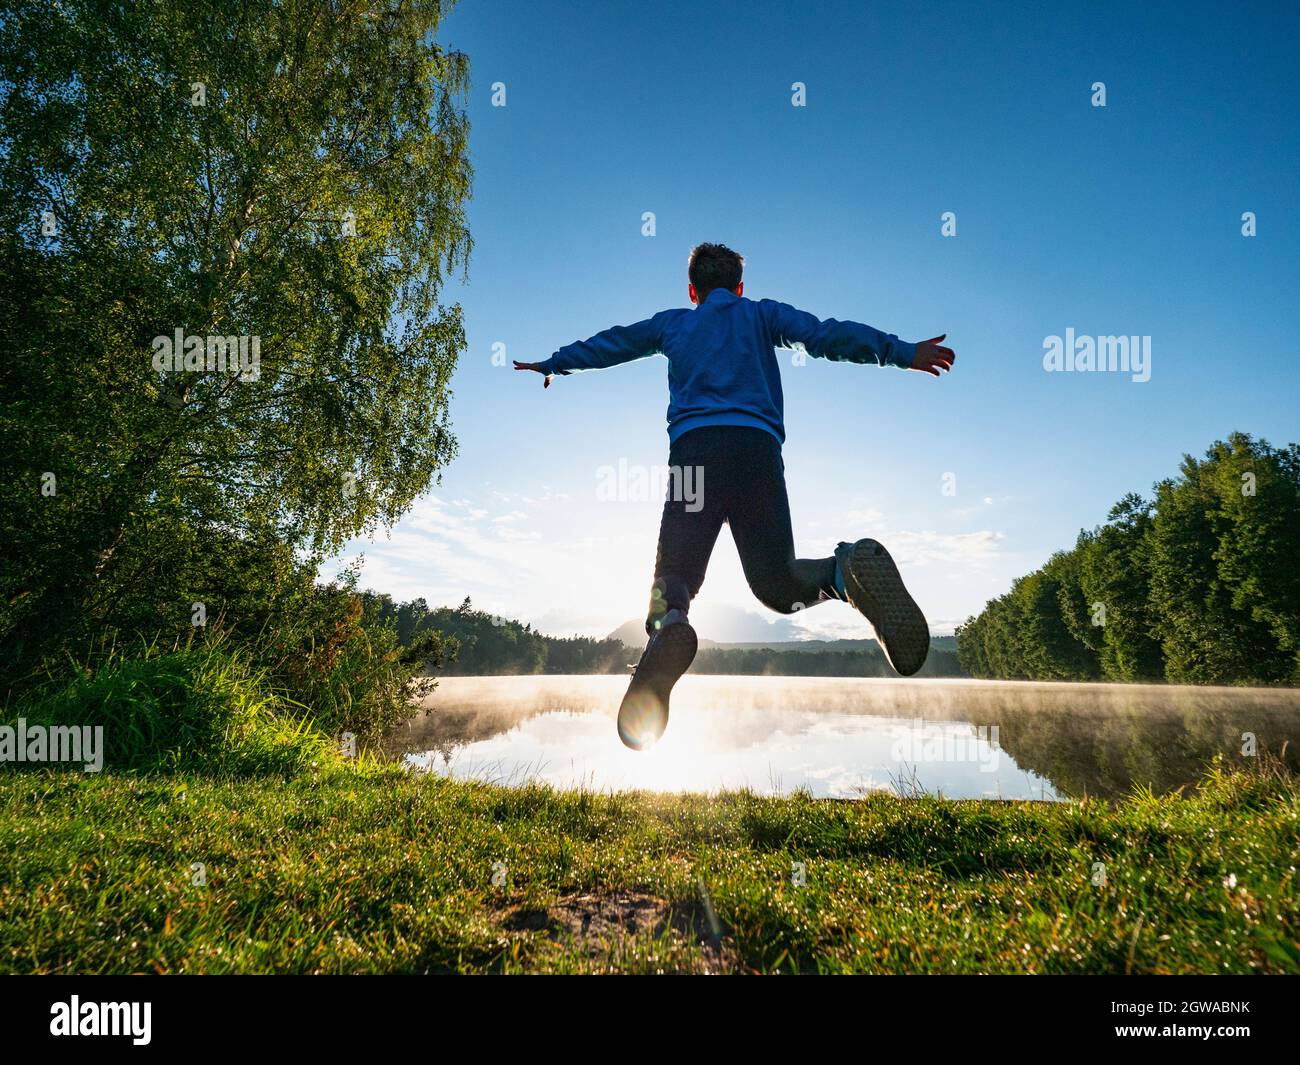 Fast Jumping Short Hair Boy At Mountain Lake Makes A Fun. Careless Childhood Concept Image. Stock Photo